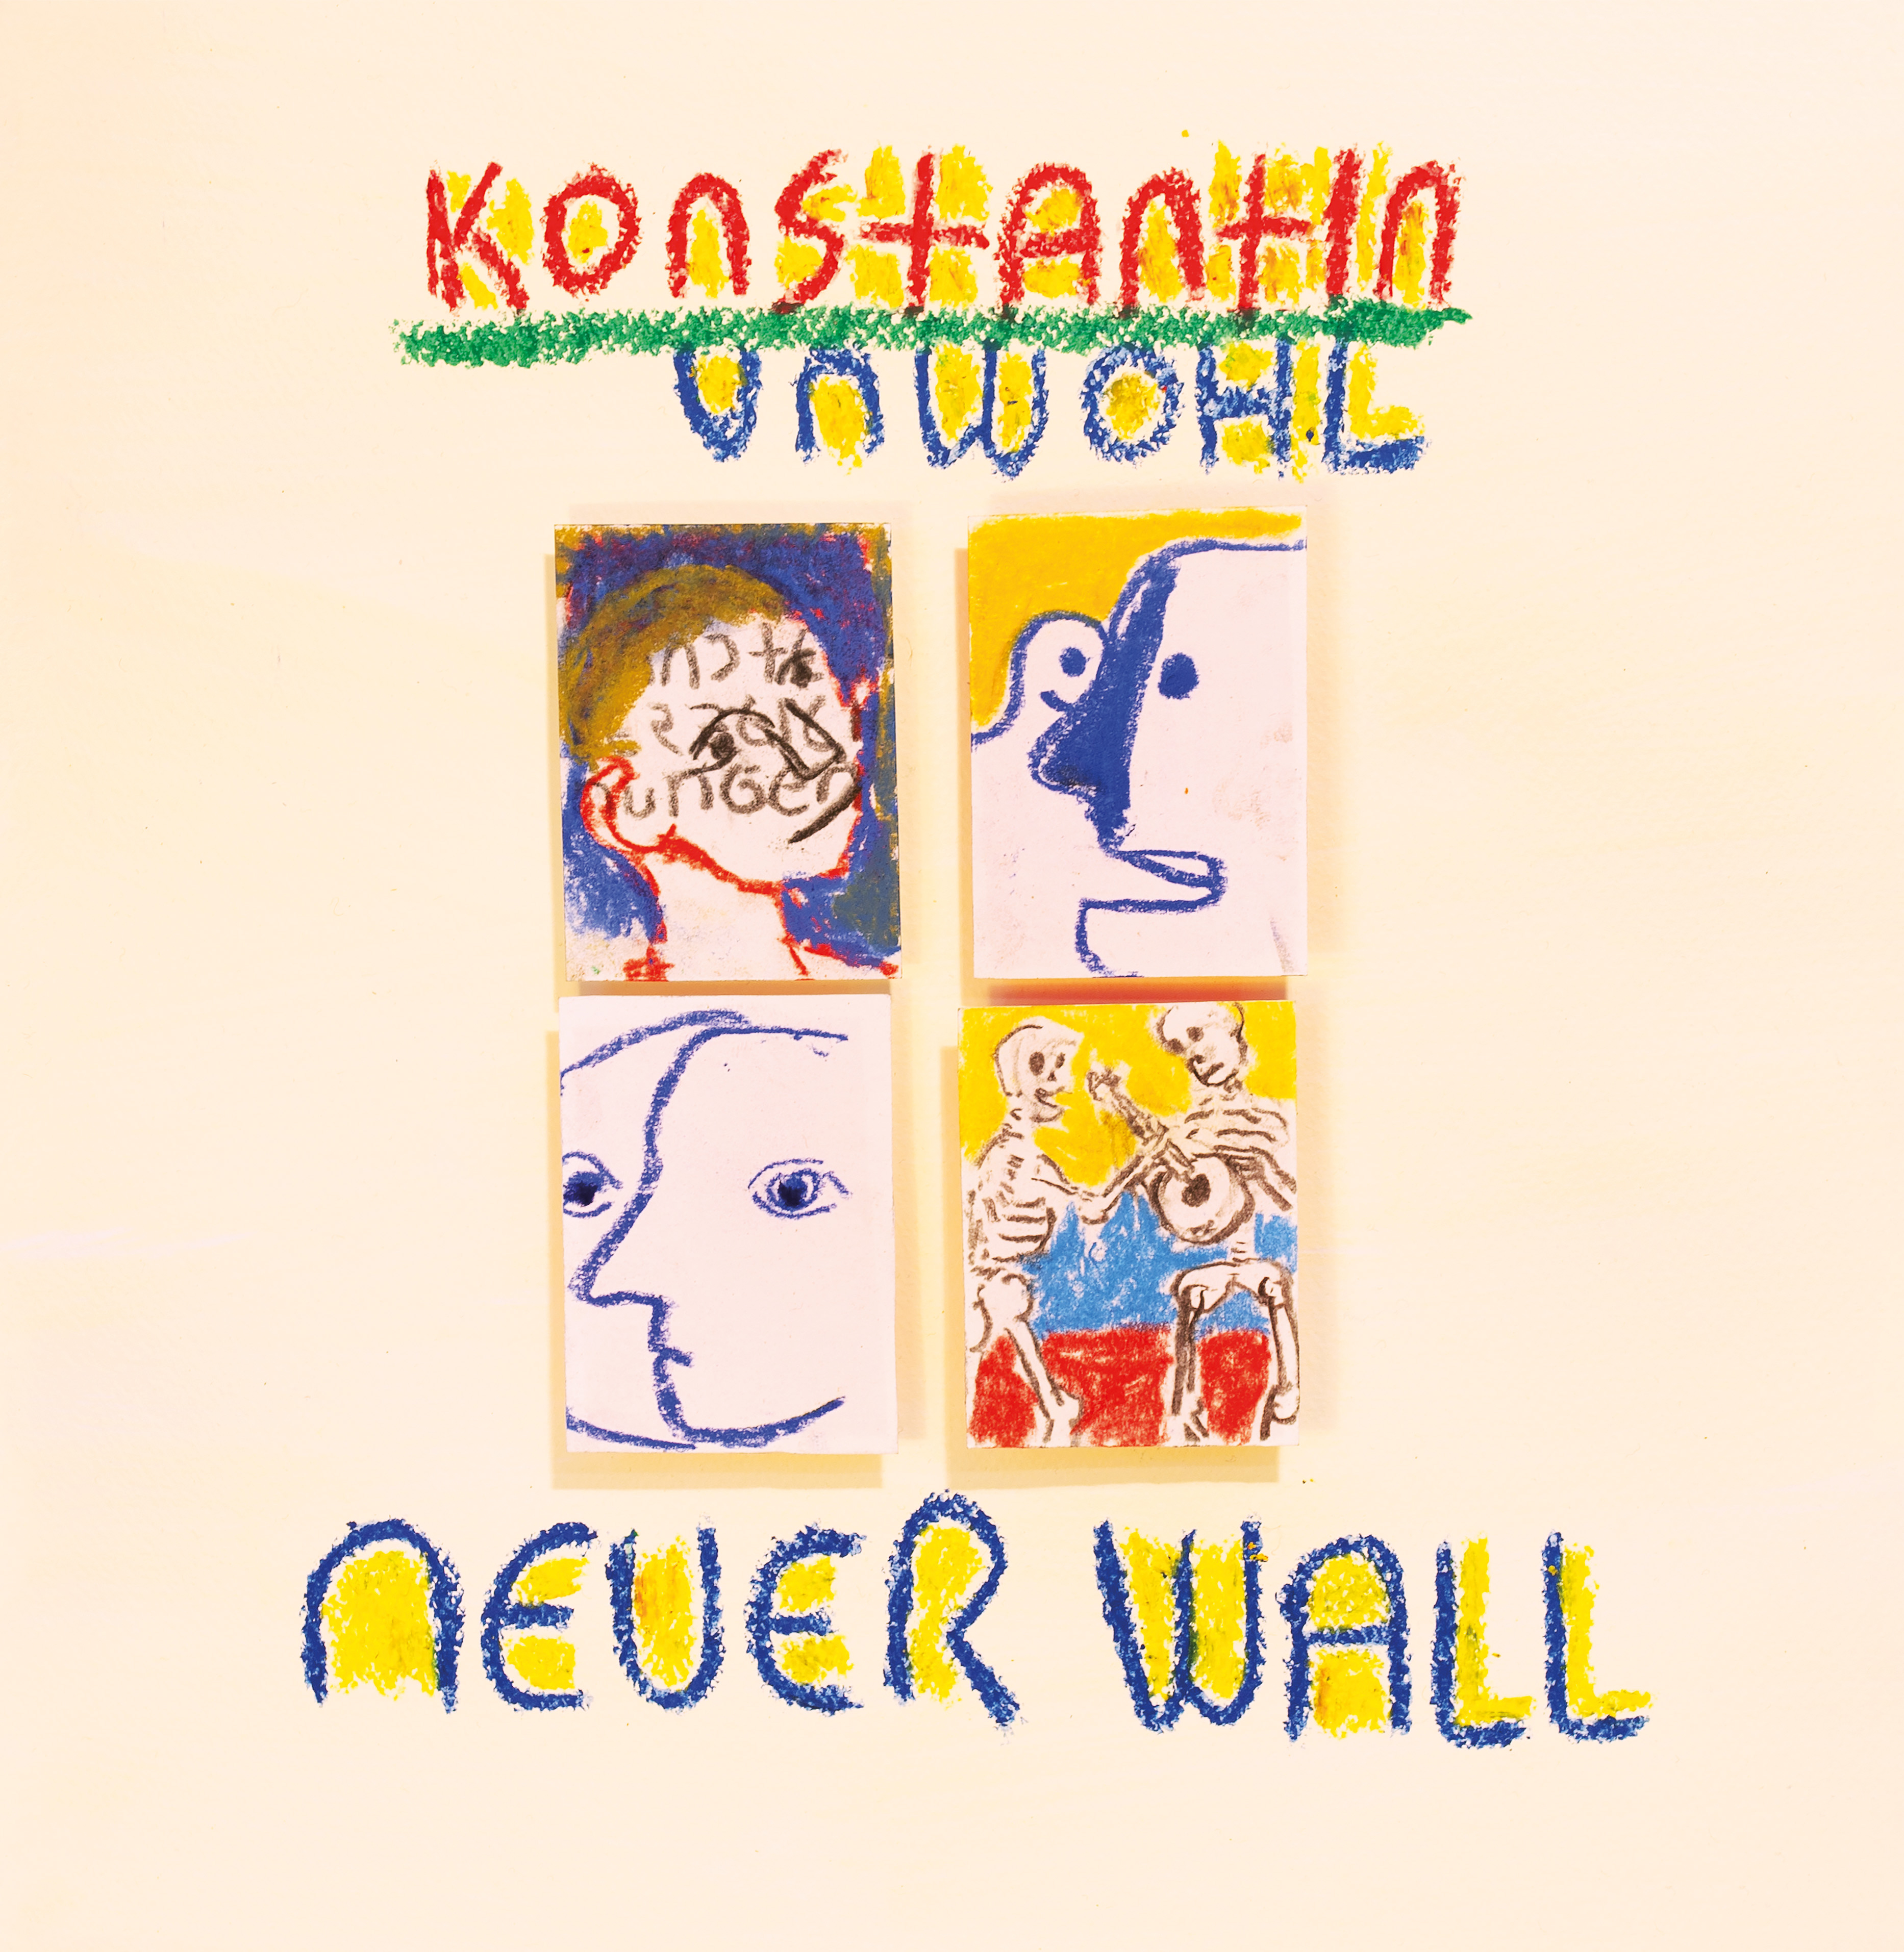 Konstantin Unwohl - Neuer Wall